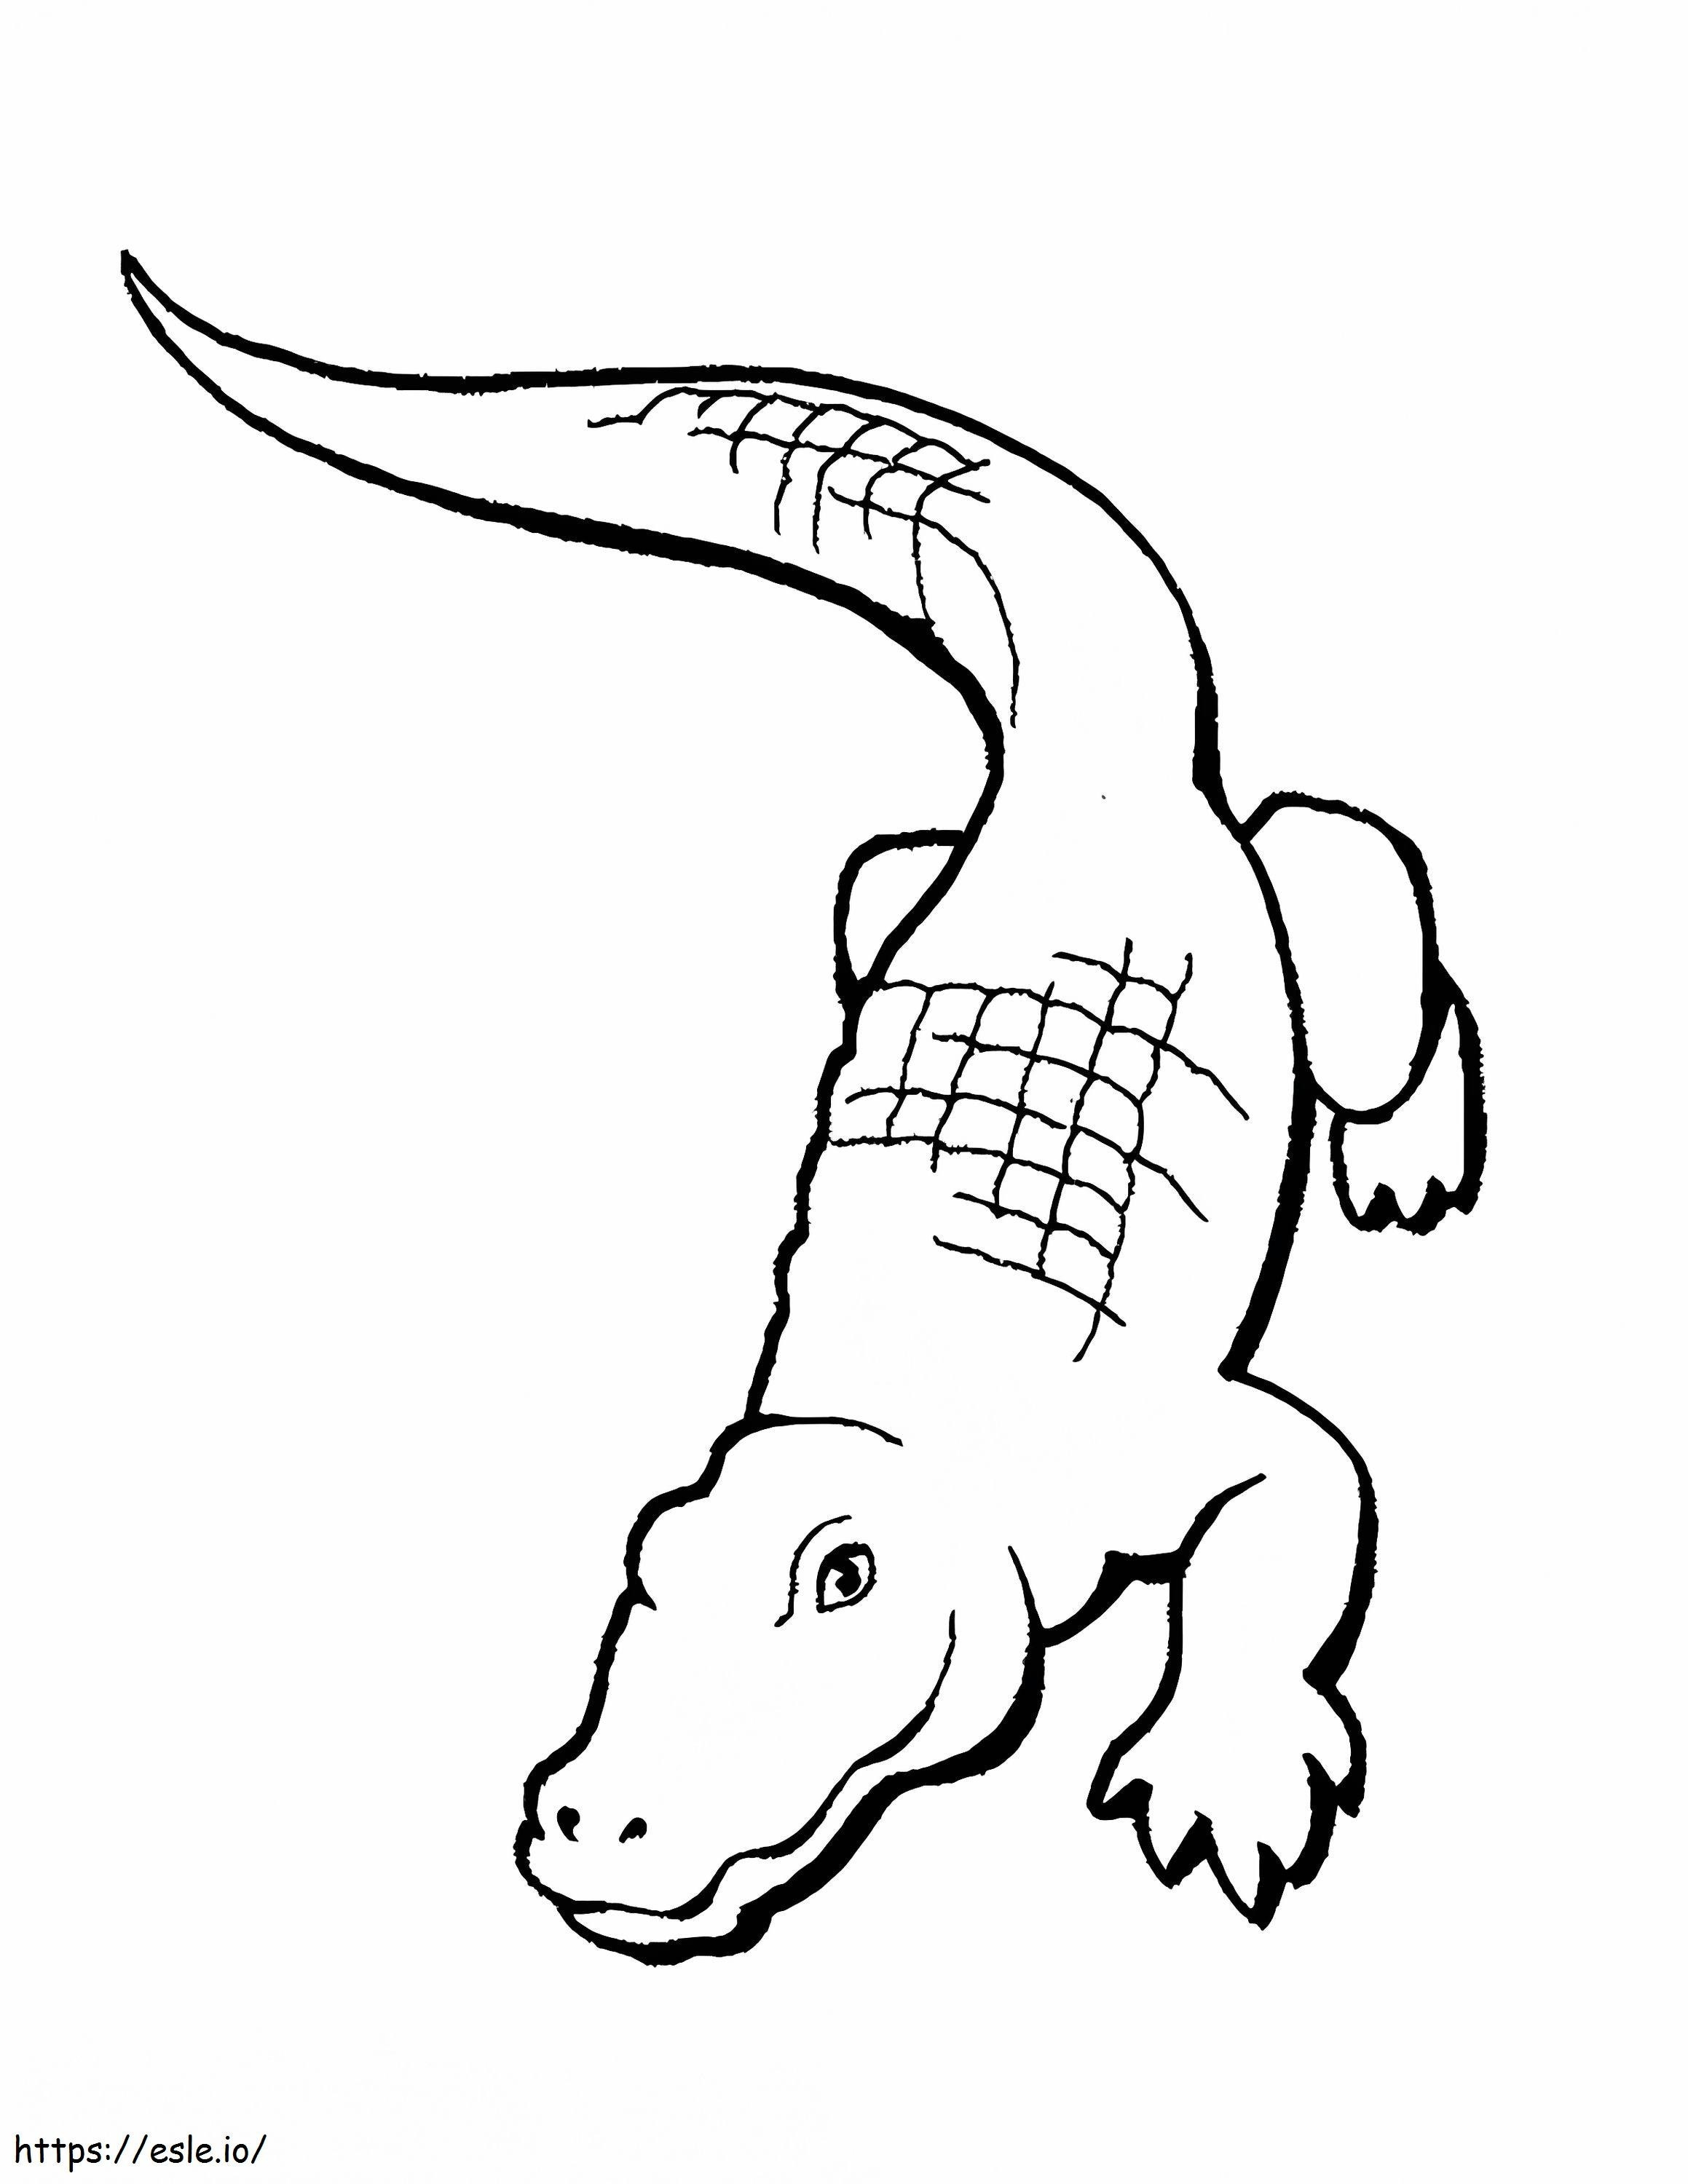 Podstawowy rysunek krokodyla kolorowanka